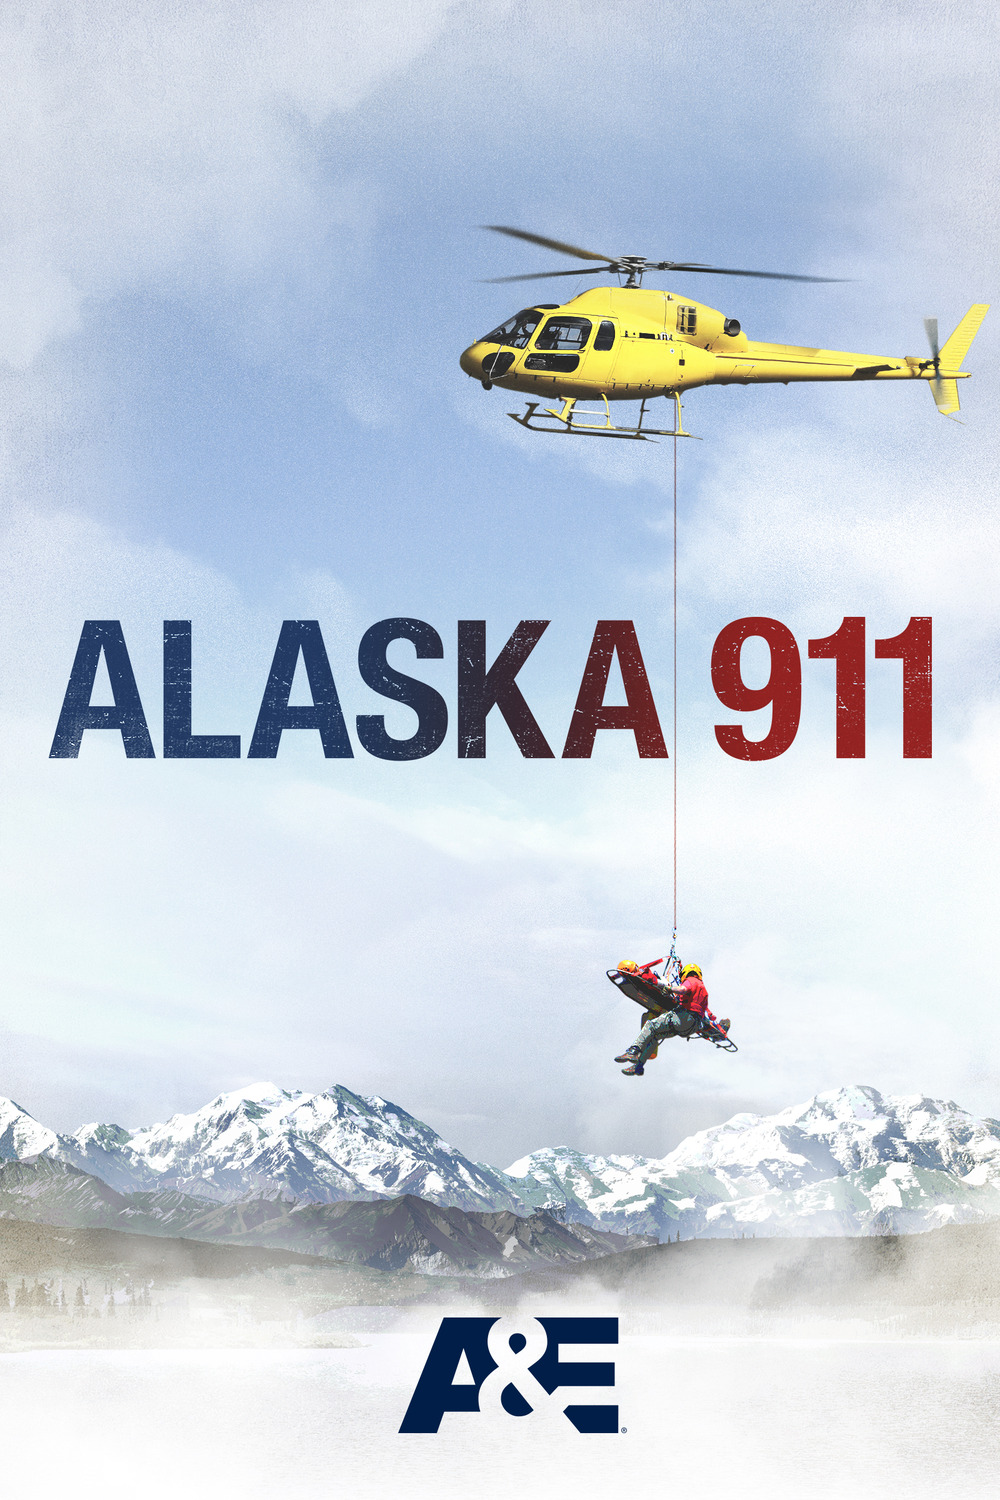 Extra Large TV Poster Image for Alaska 911 